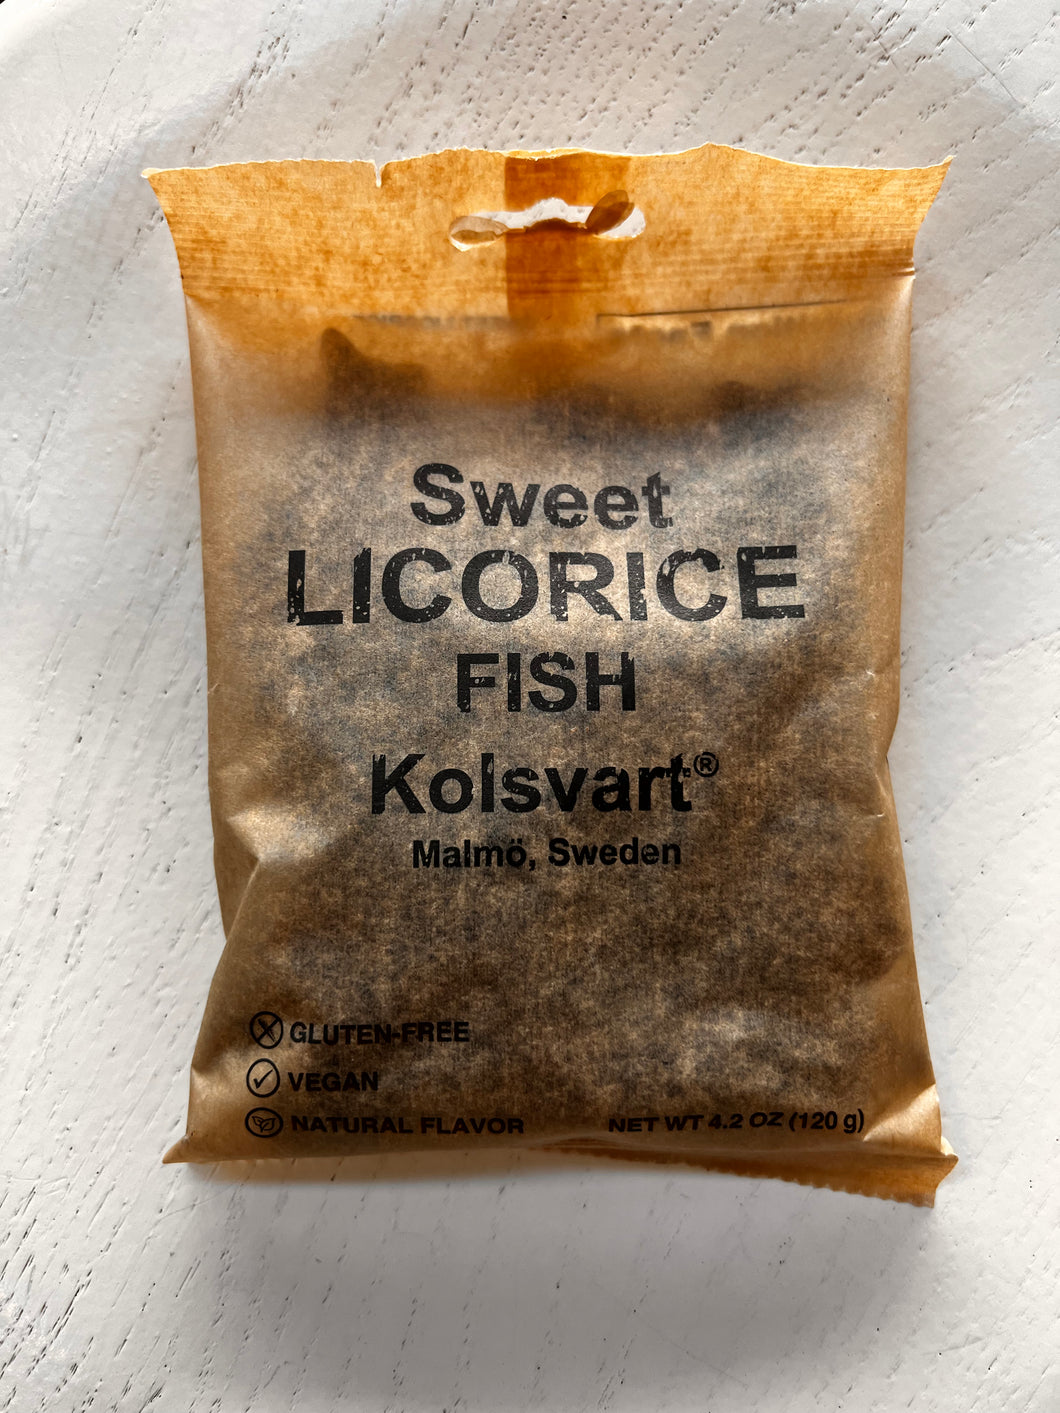 Sweet Licorice Swedish Fish